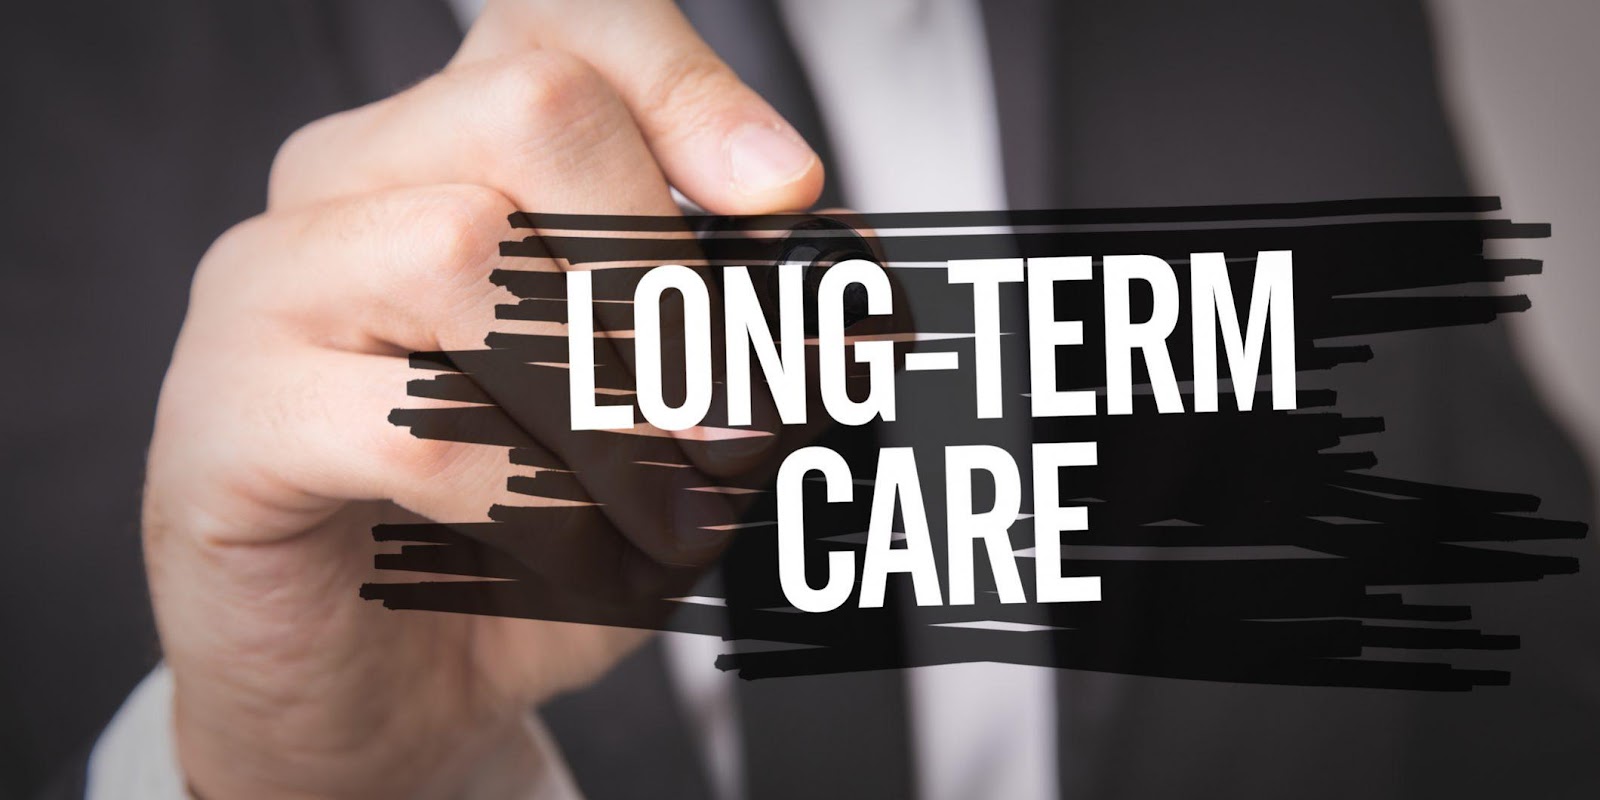 Long Term Care Insurance Companies